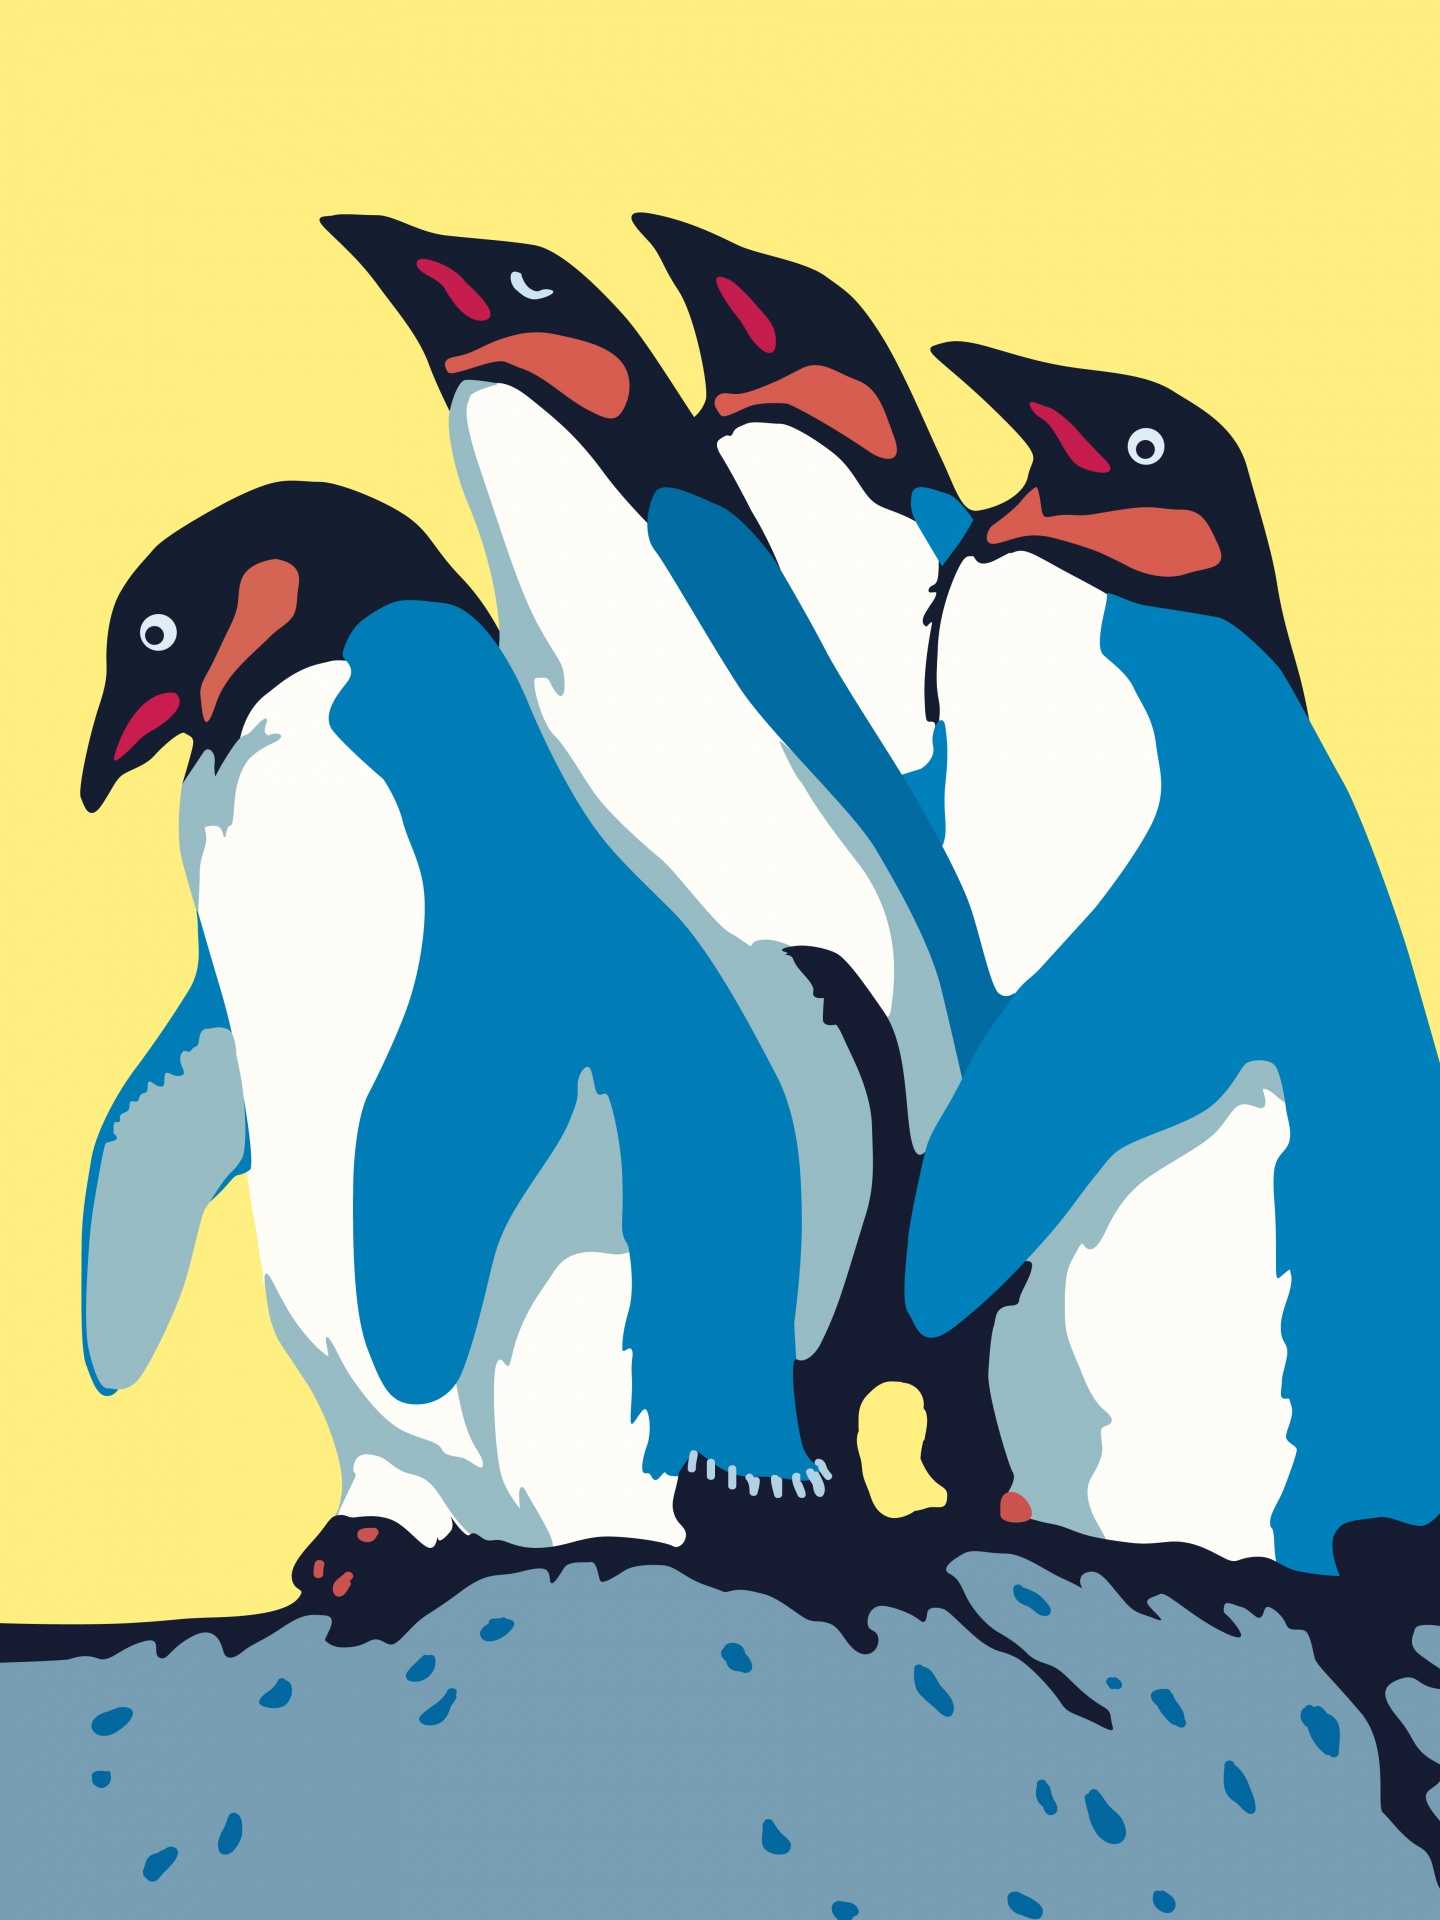 Penguin Print